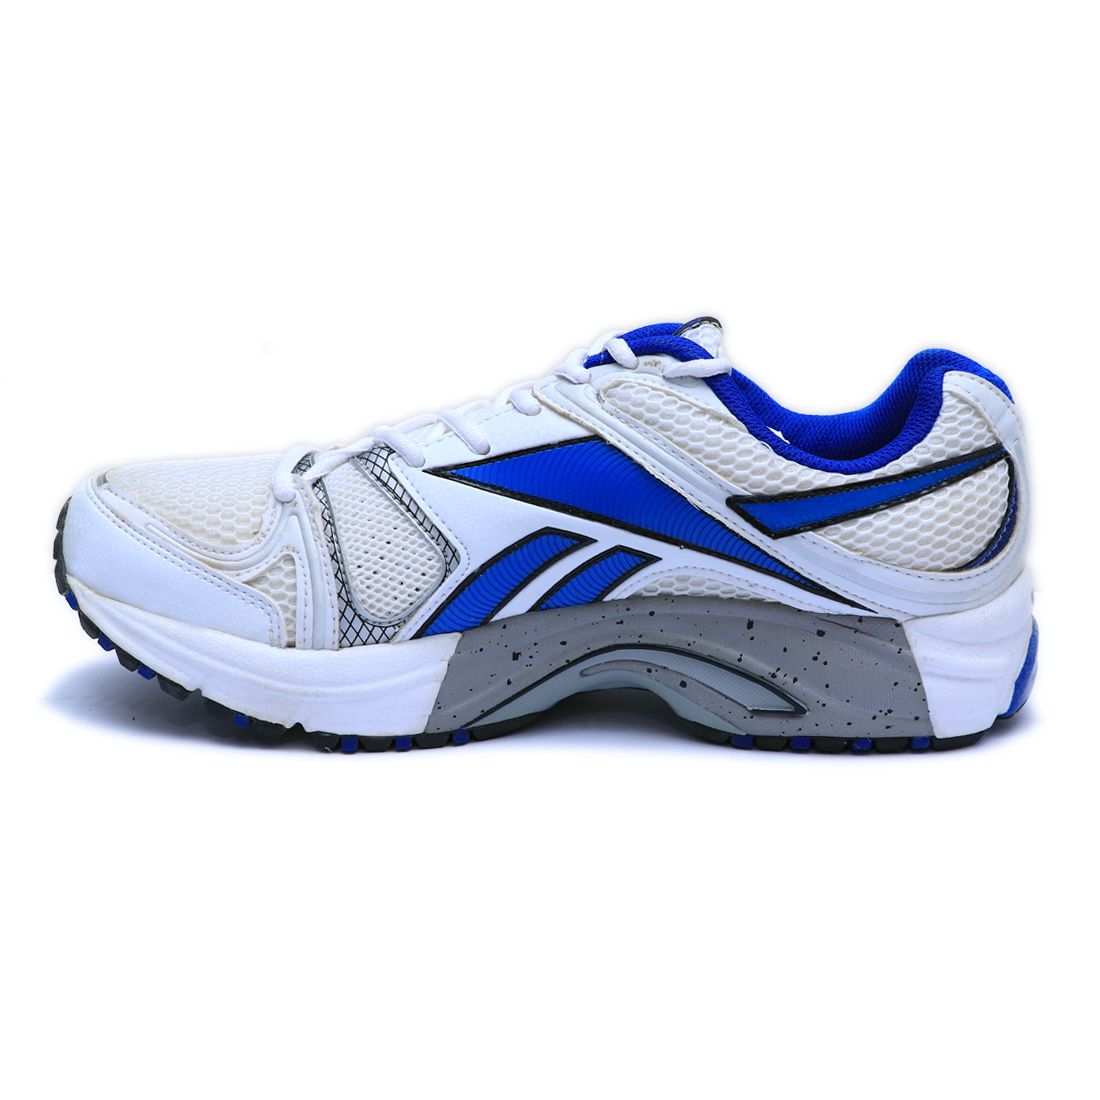 Reebok Prime Select Run Trainer White Running Shoes - Buy Reebok Prime ...